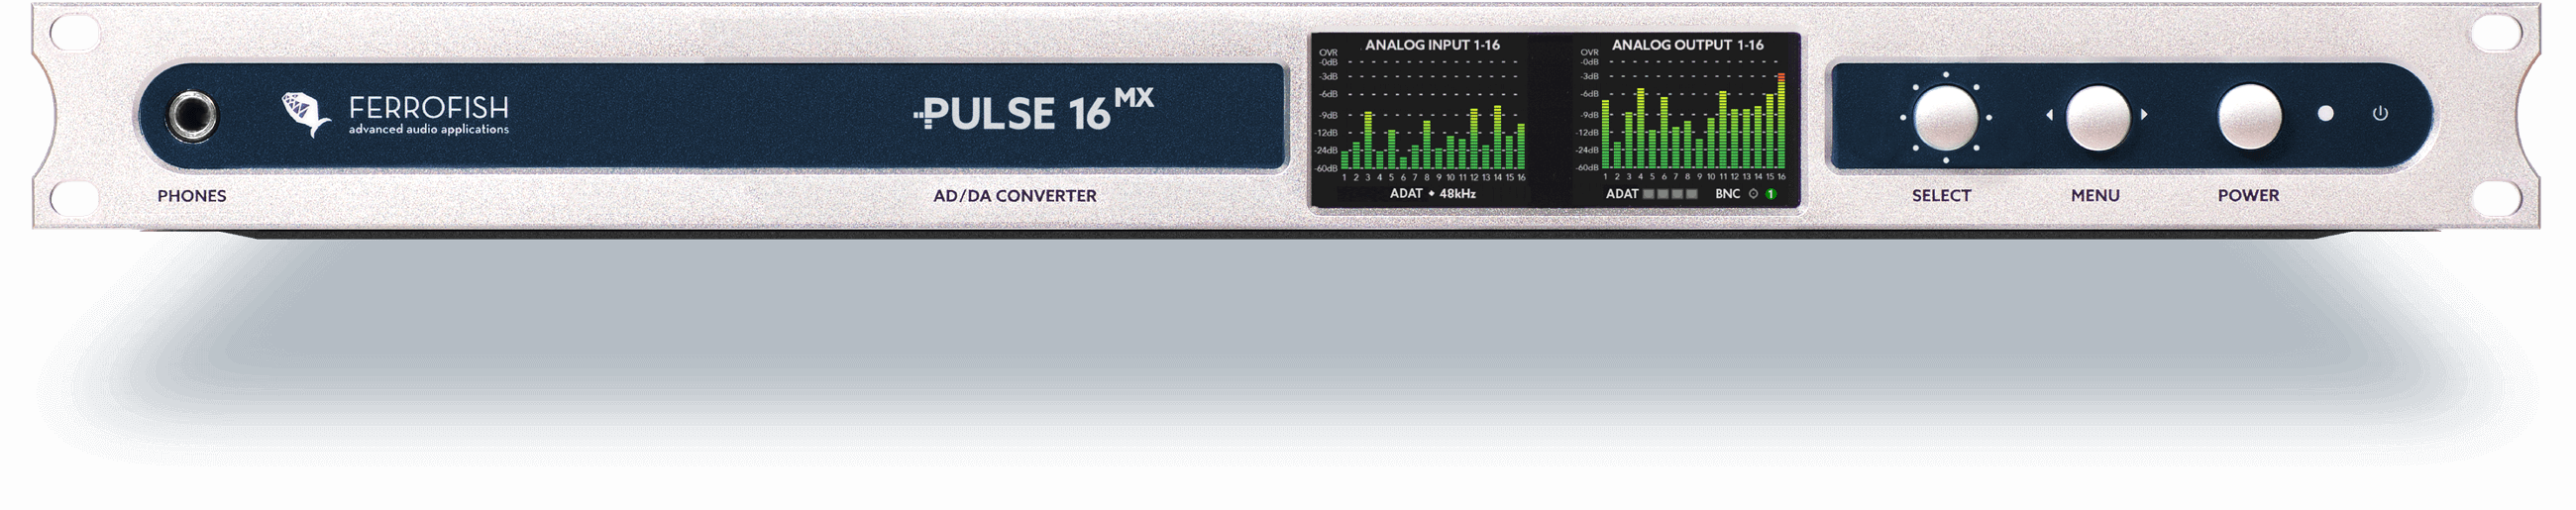 New Ferrofish Pulse 16 MX w/ Analog I/O Modified for +24dBu Level Compatibility | High Quality MADI Converter